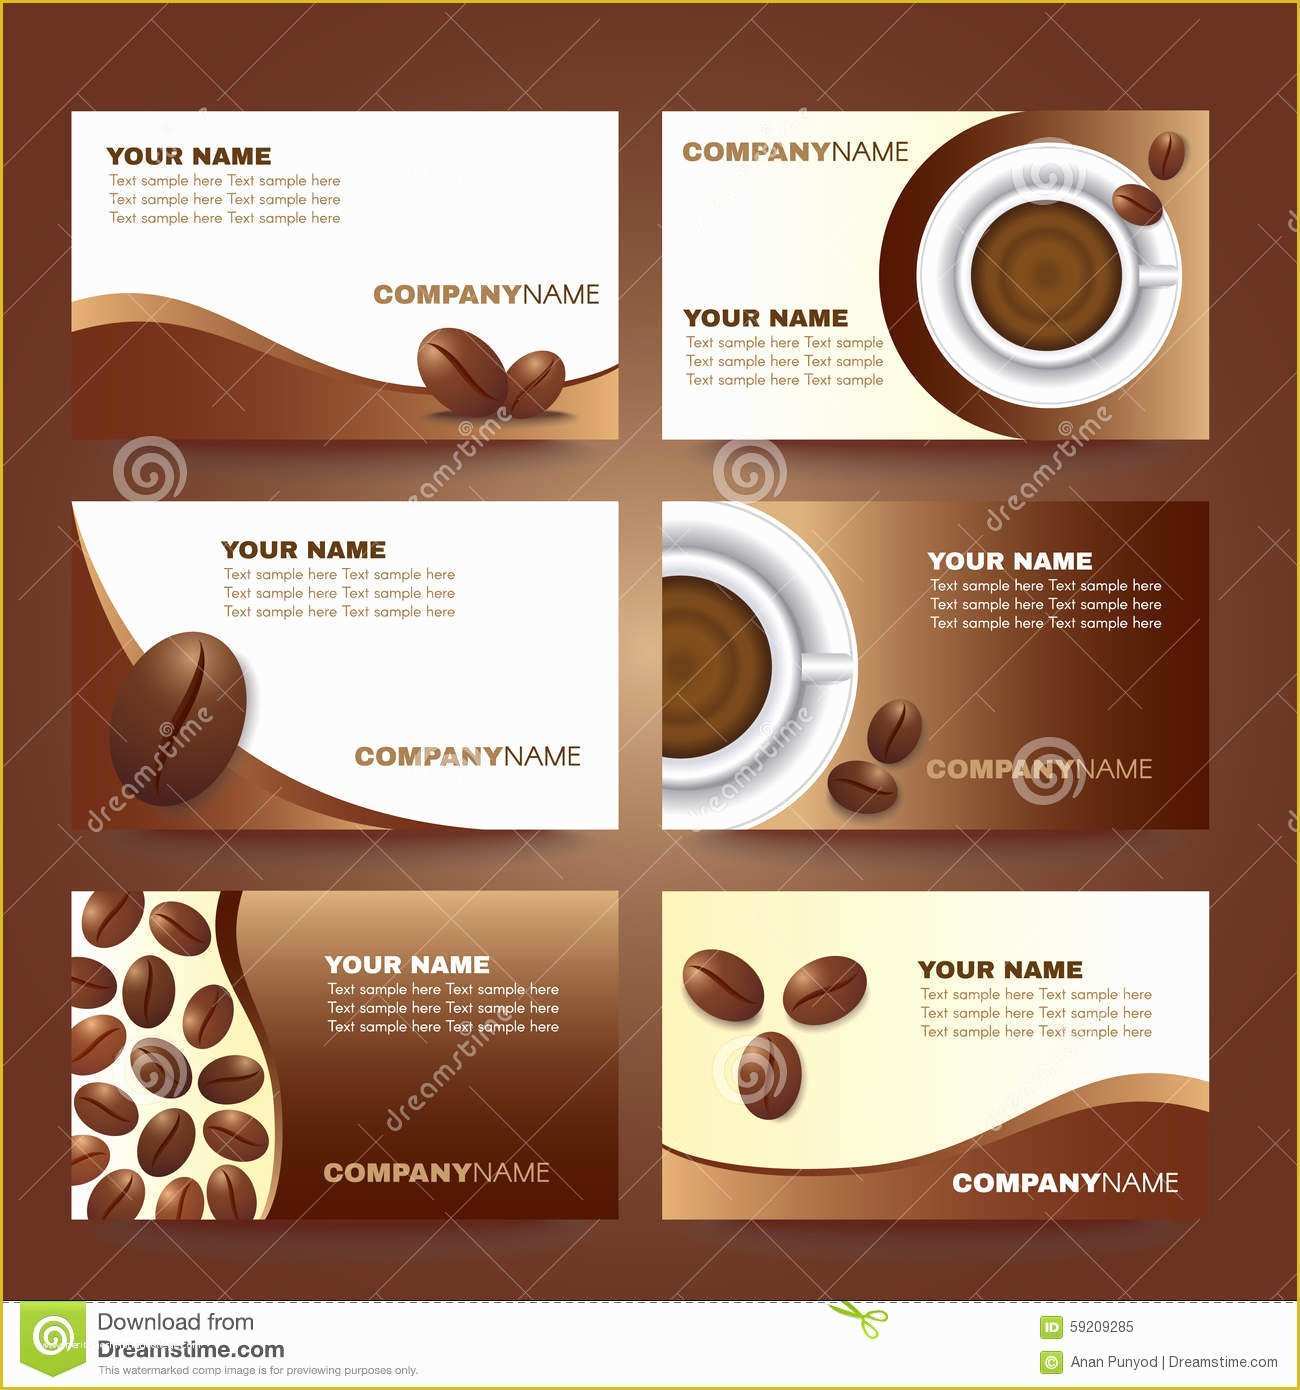 Coffee Business Card Template Free Of Coffee Business Card Template Vector Set Design Stock